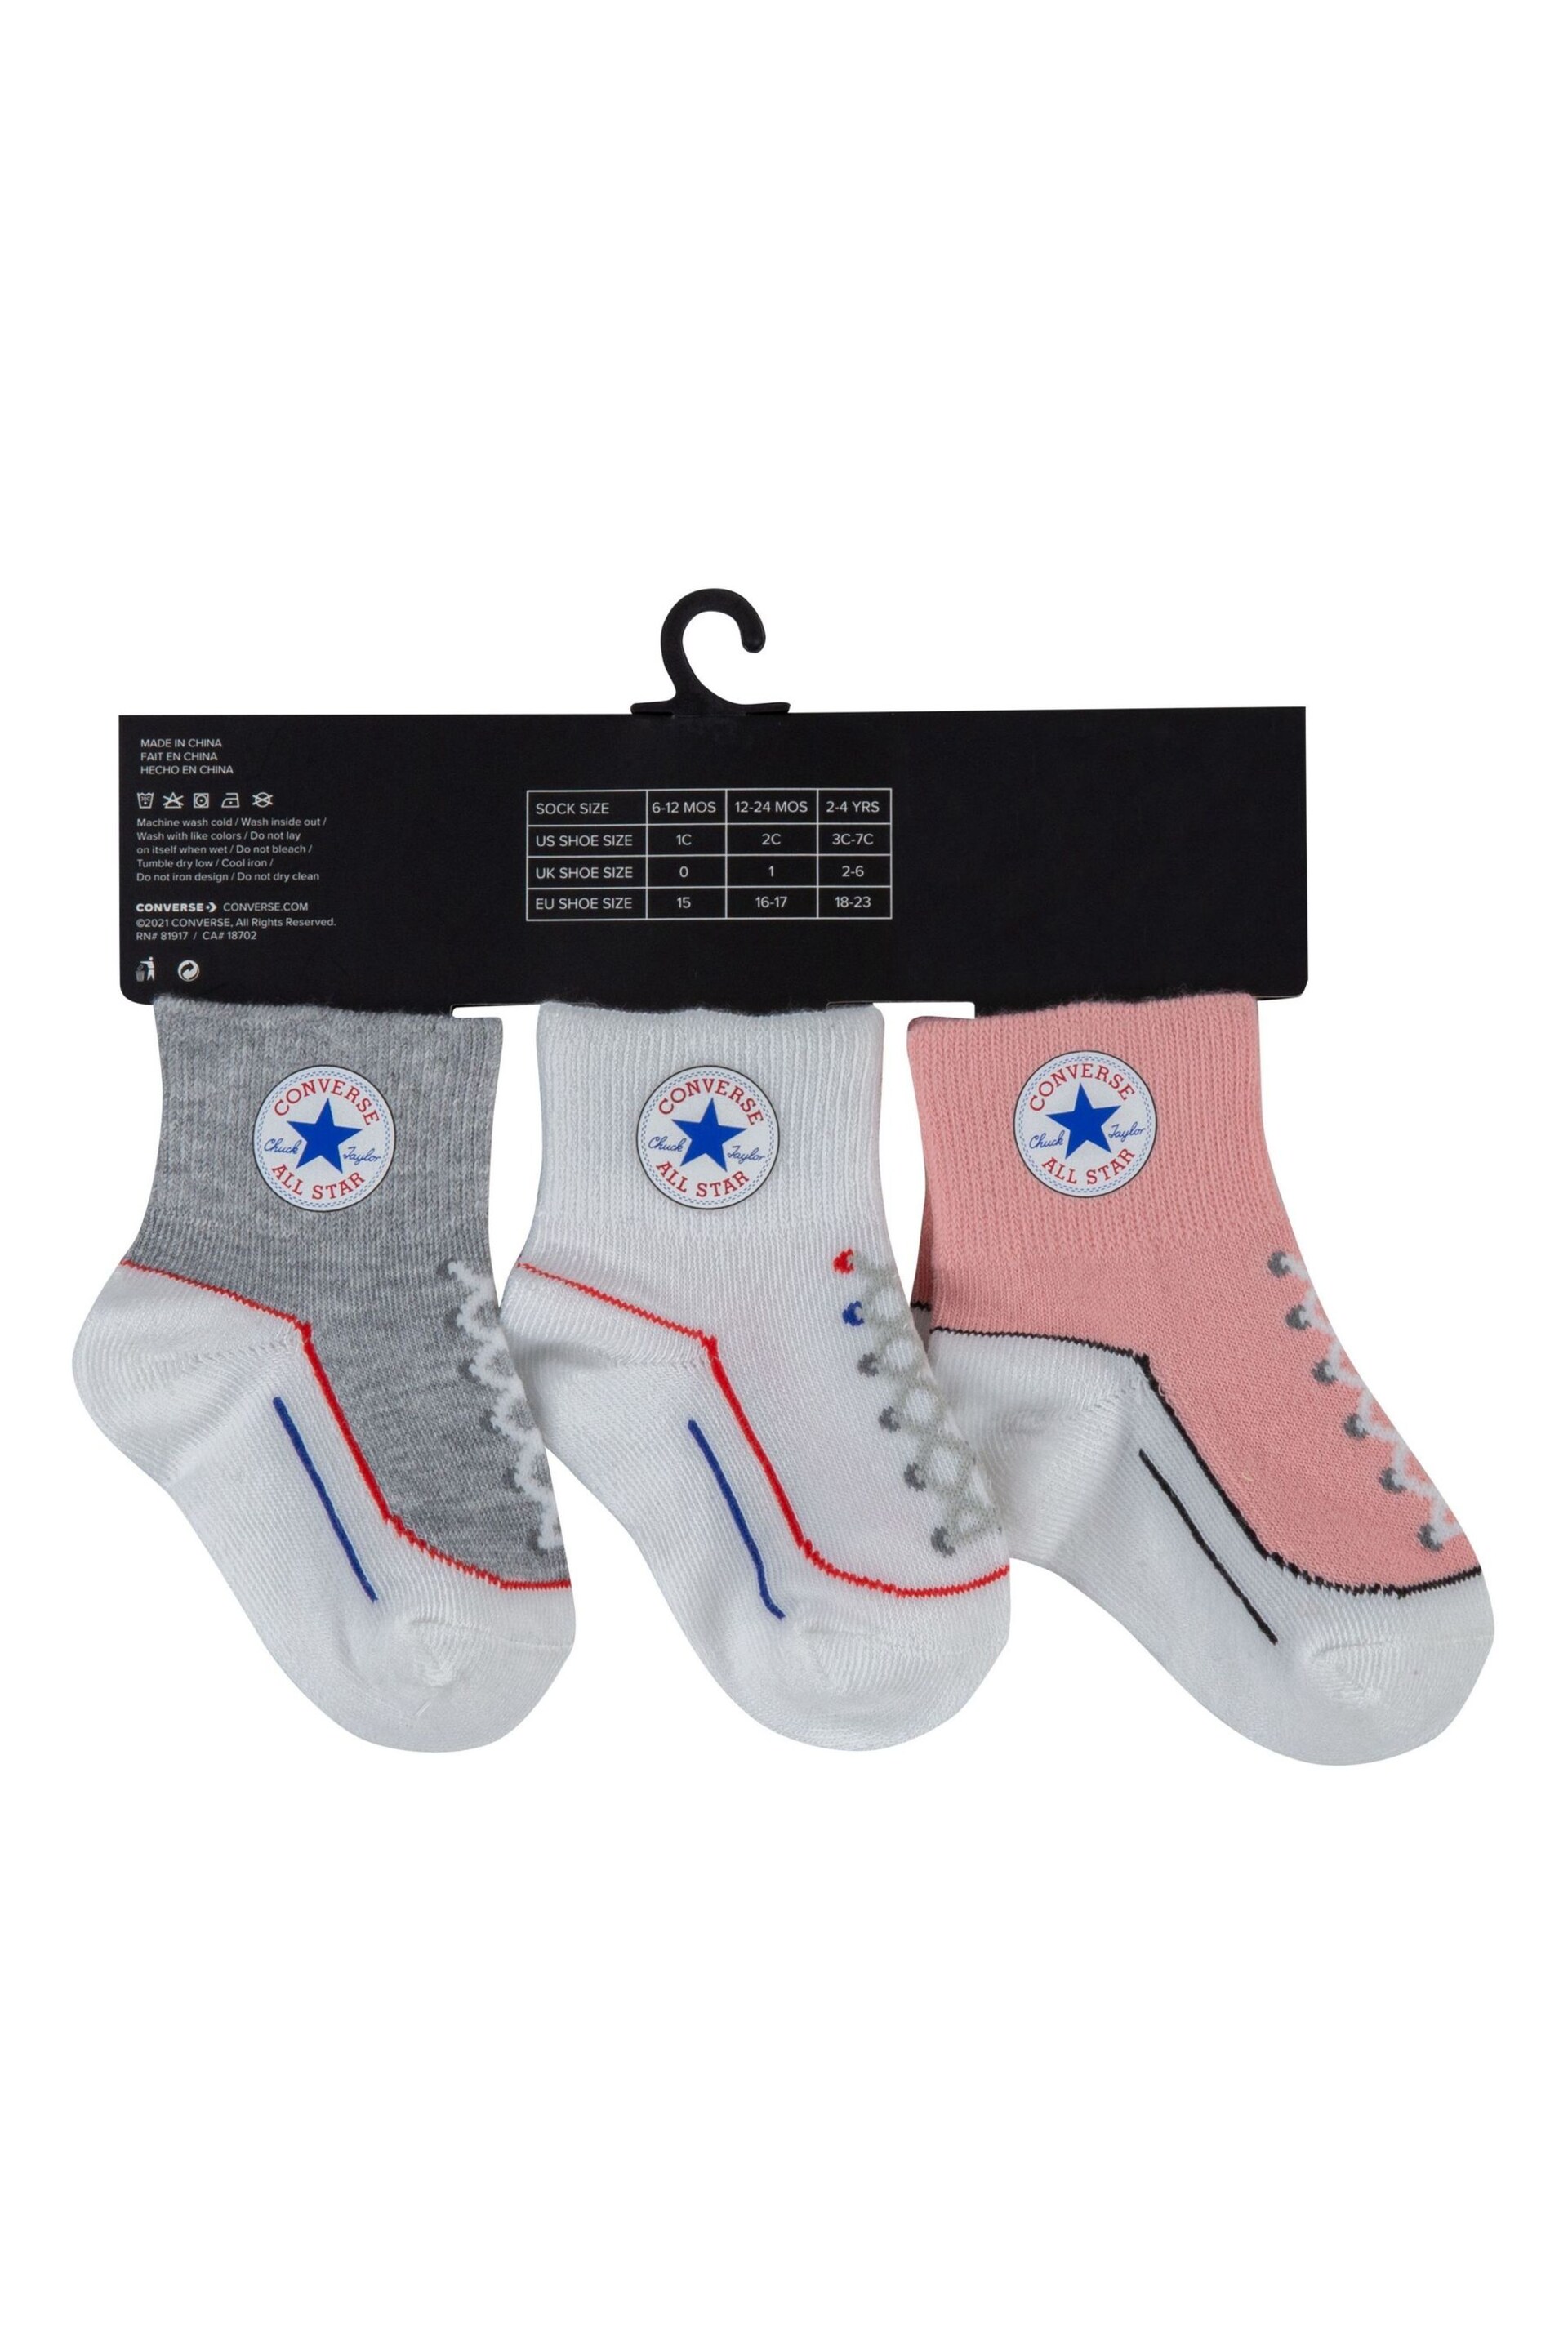 Converse Light Pink Infant Straited Socks 3 Pack - Image 3 of 4